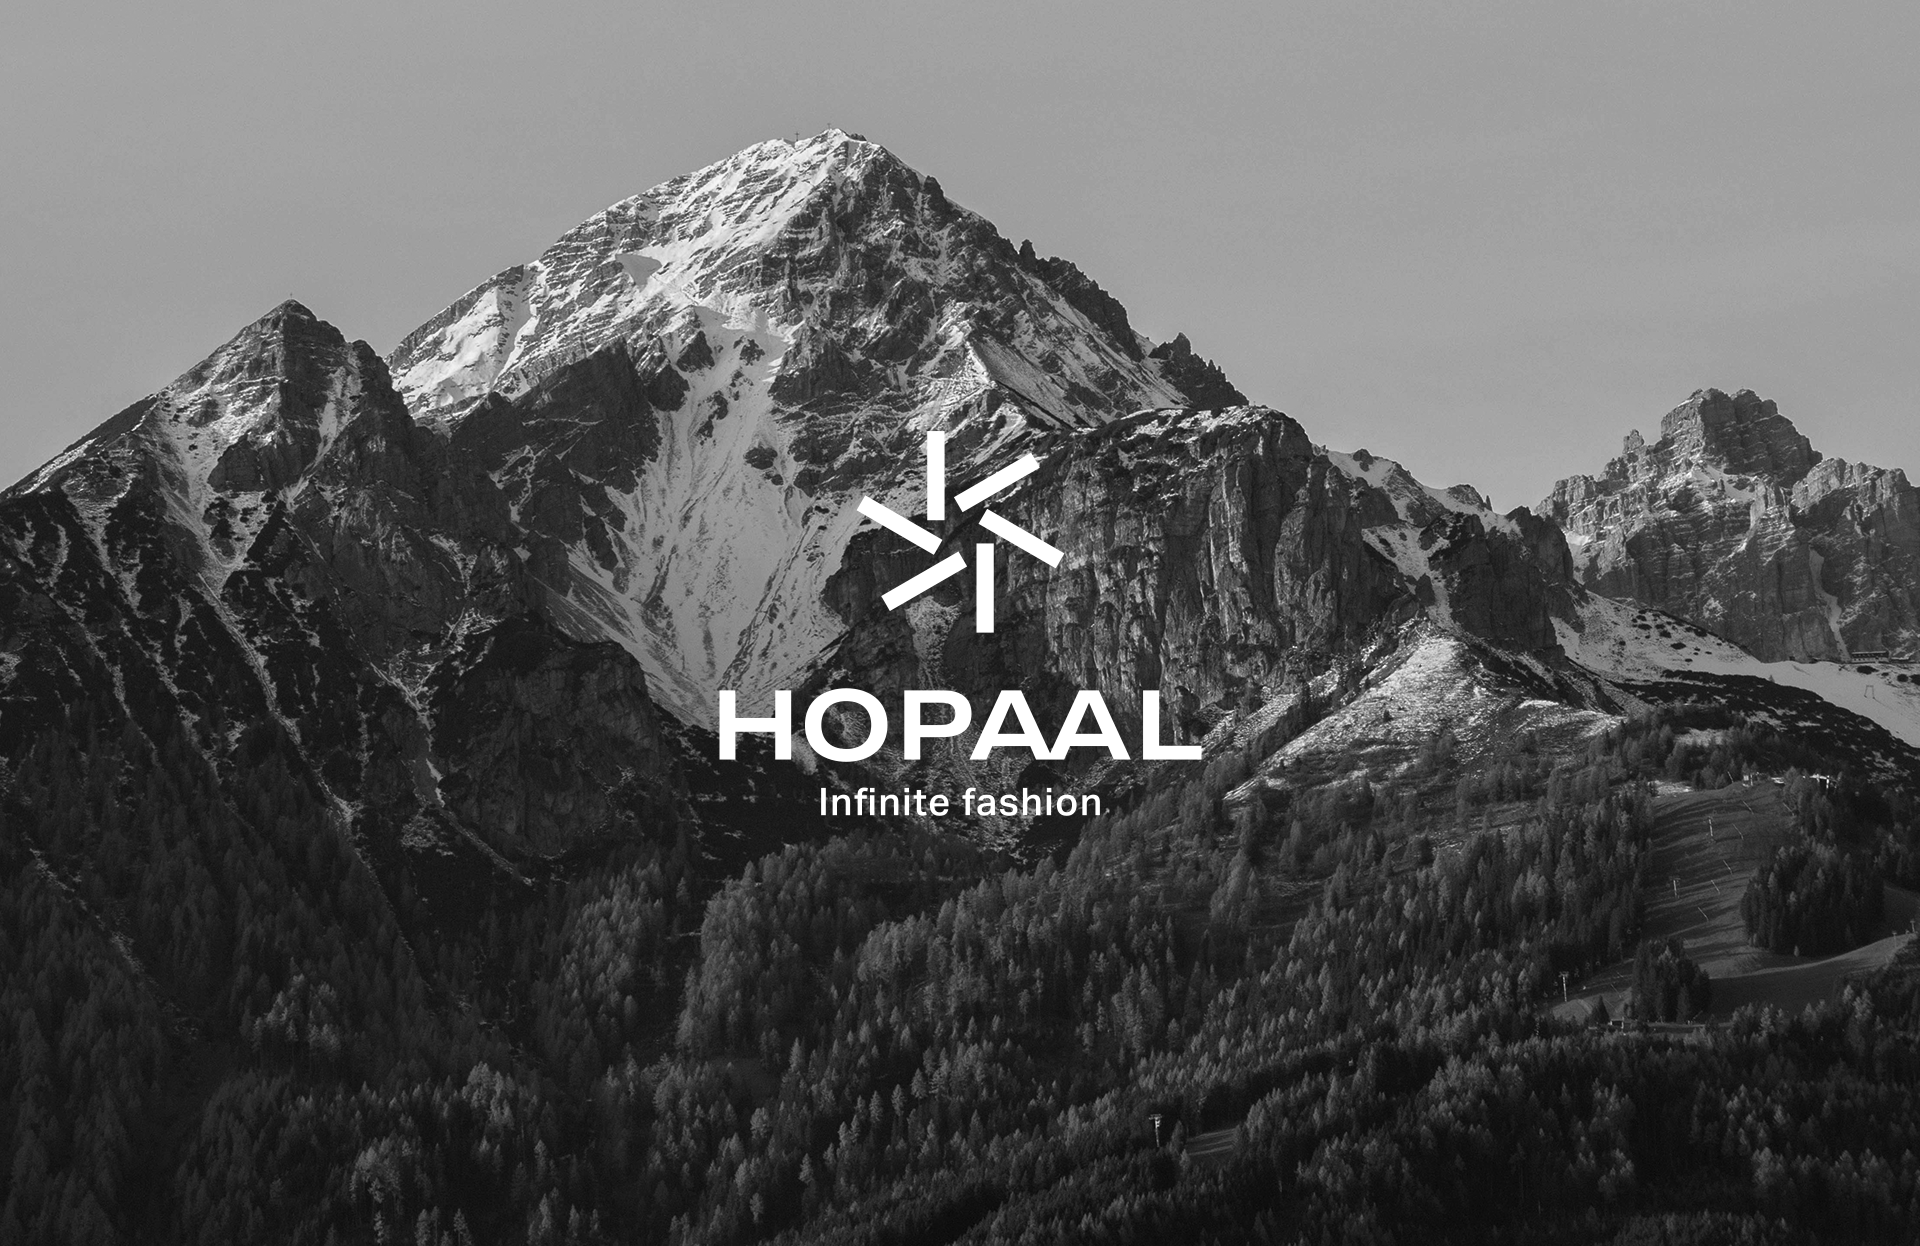 HOPAALPlan-de-travail-1-copie-25